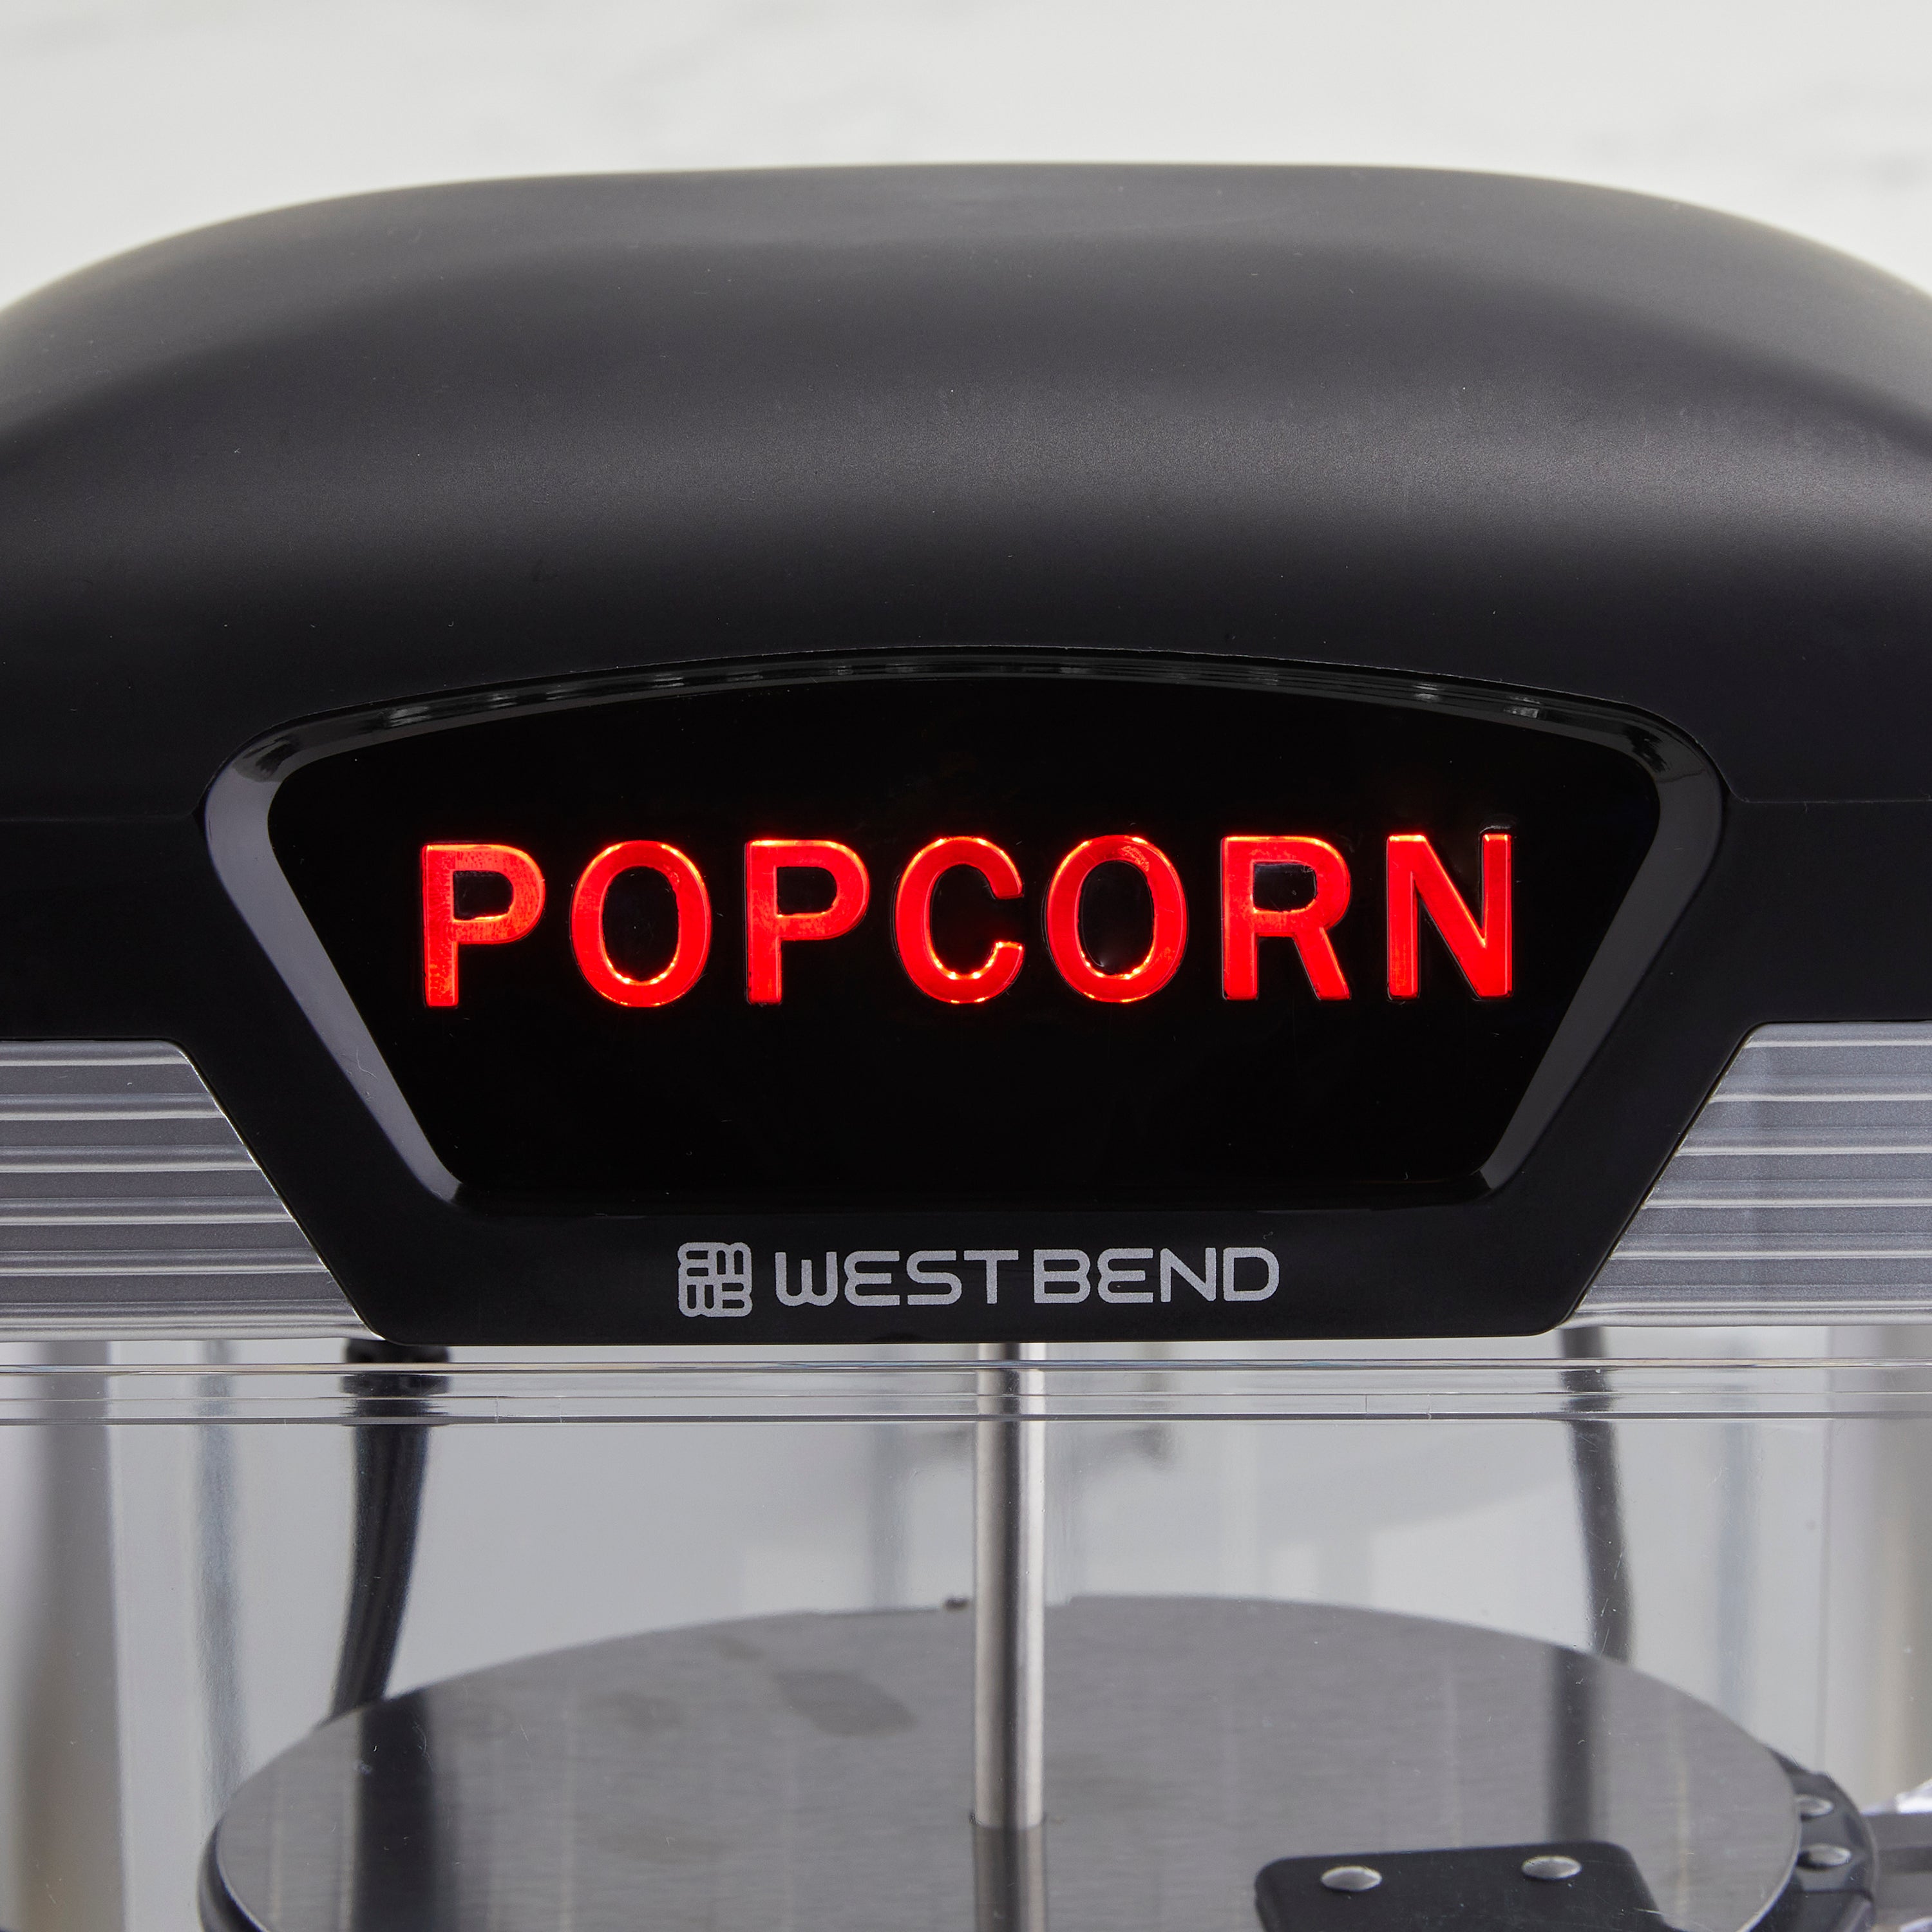 STARRYStir Crazy Movie Theater Popcorn Popper, Gourmet Popcorn